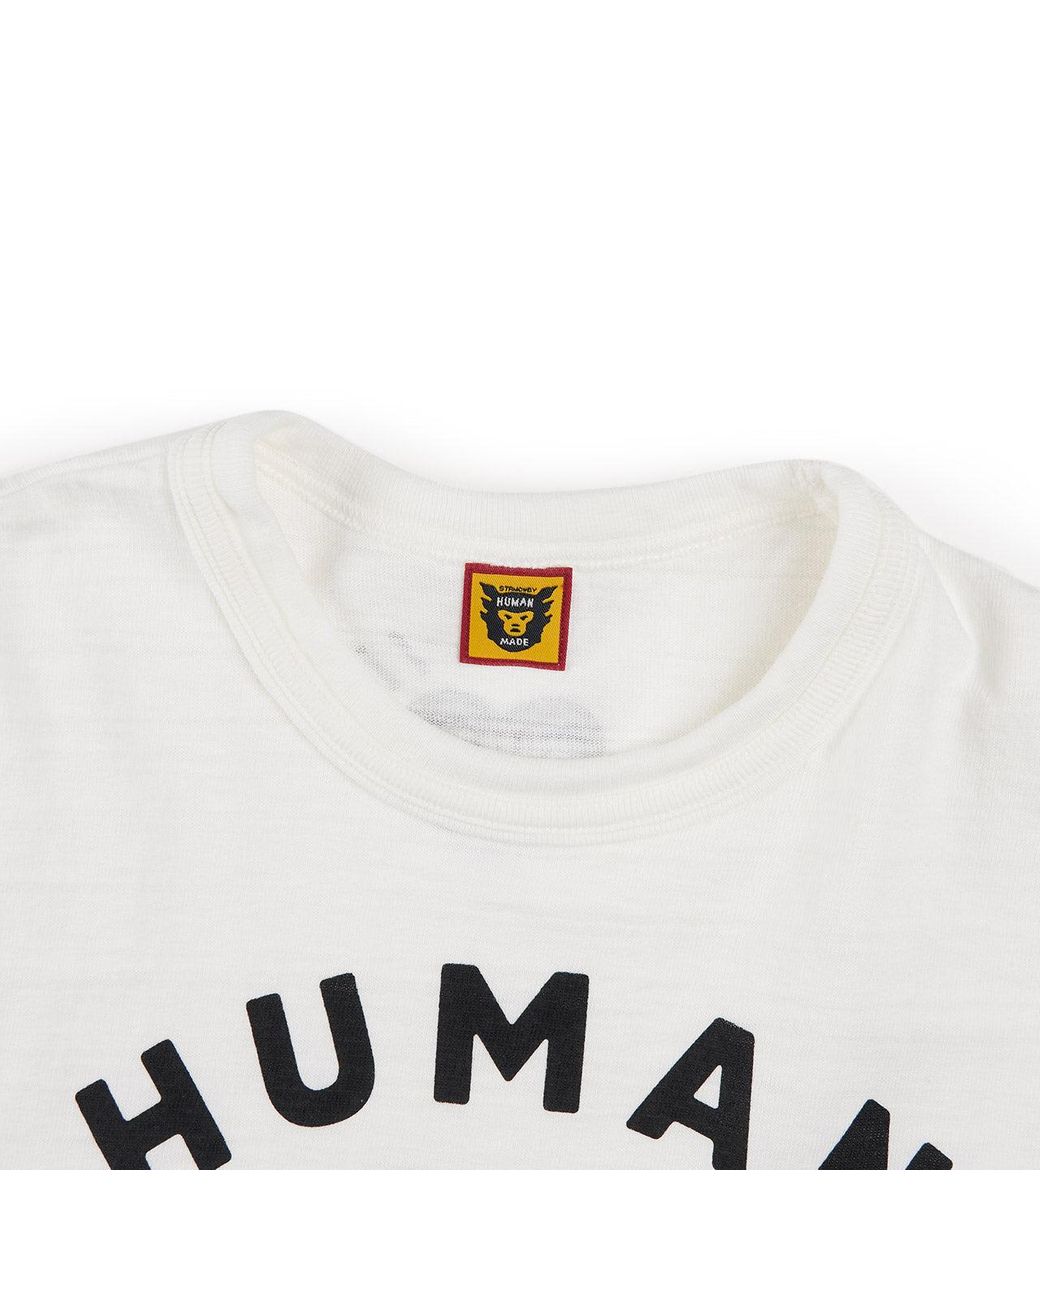 Human Made Graphic T-Shirt #07 Black